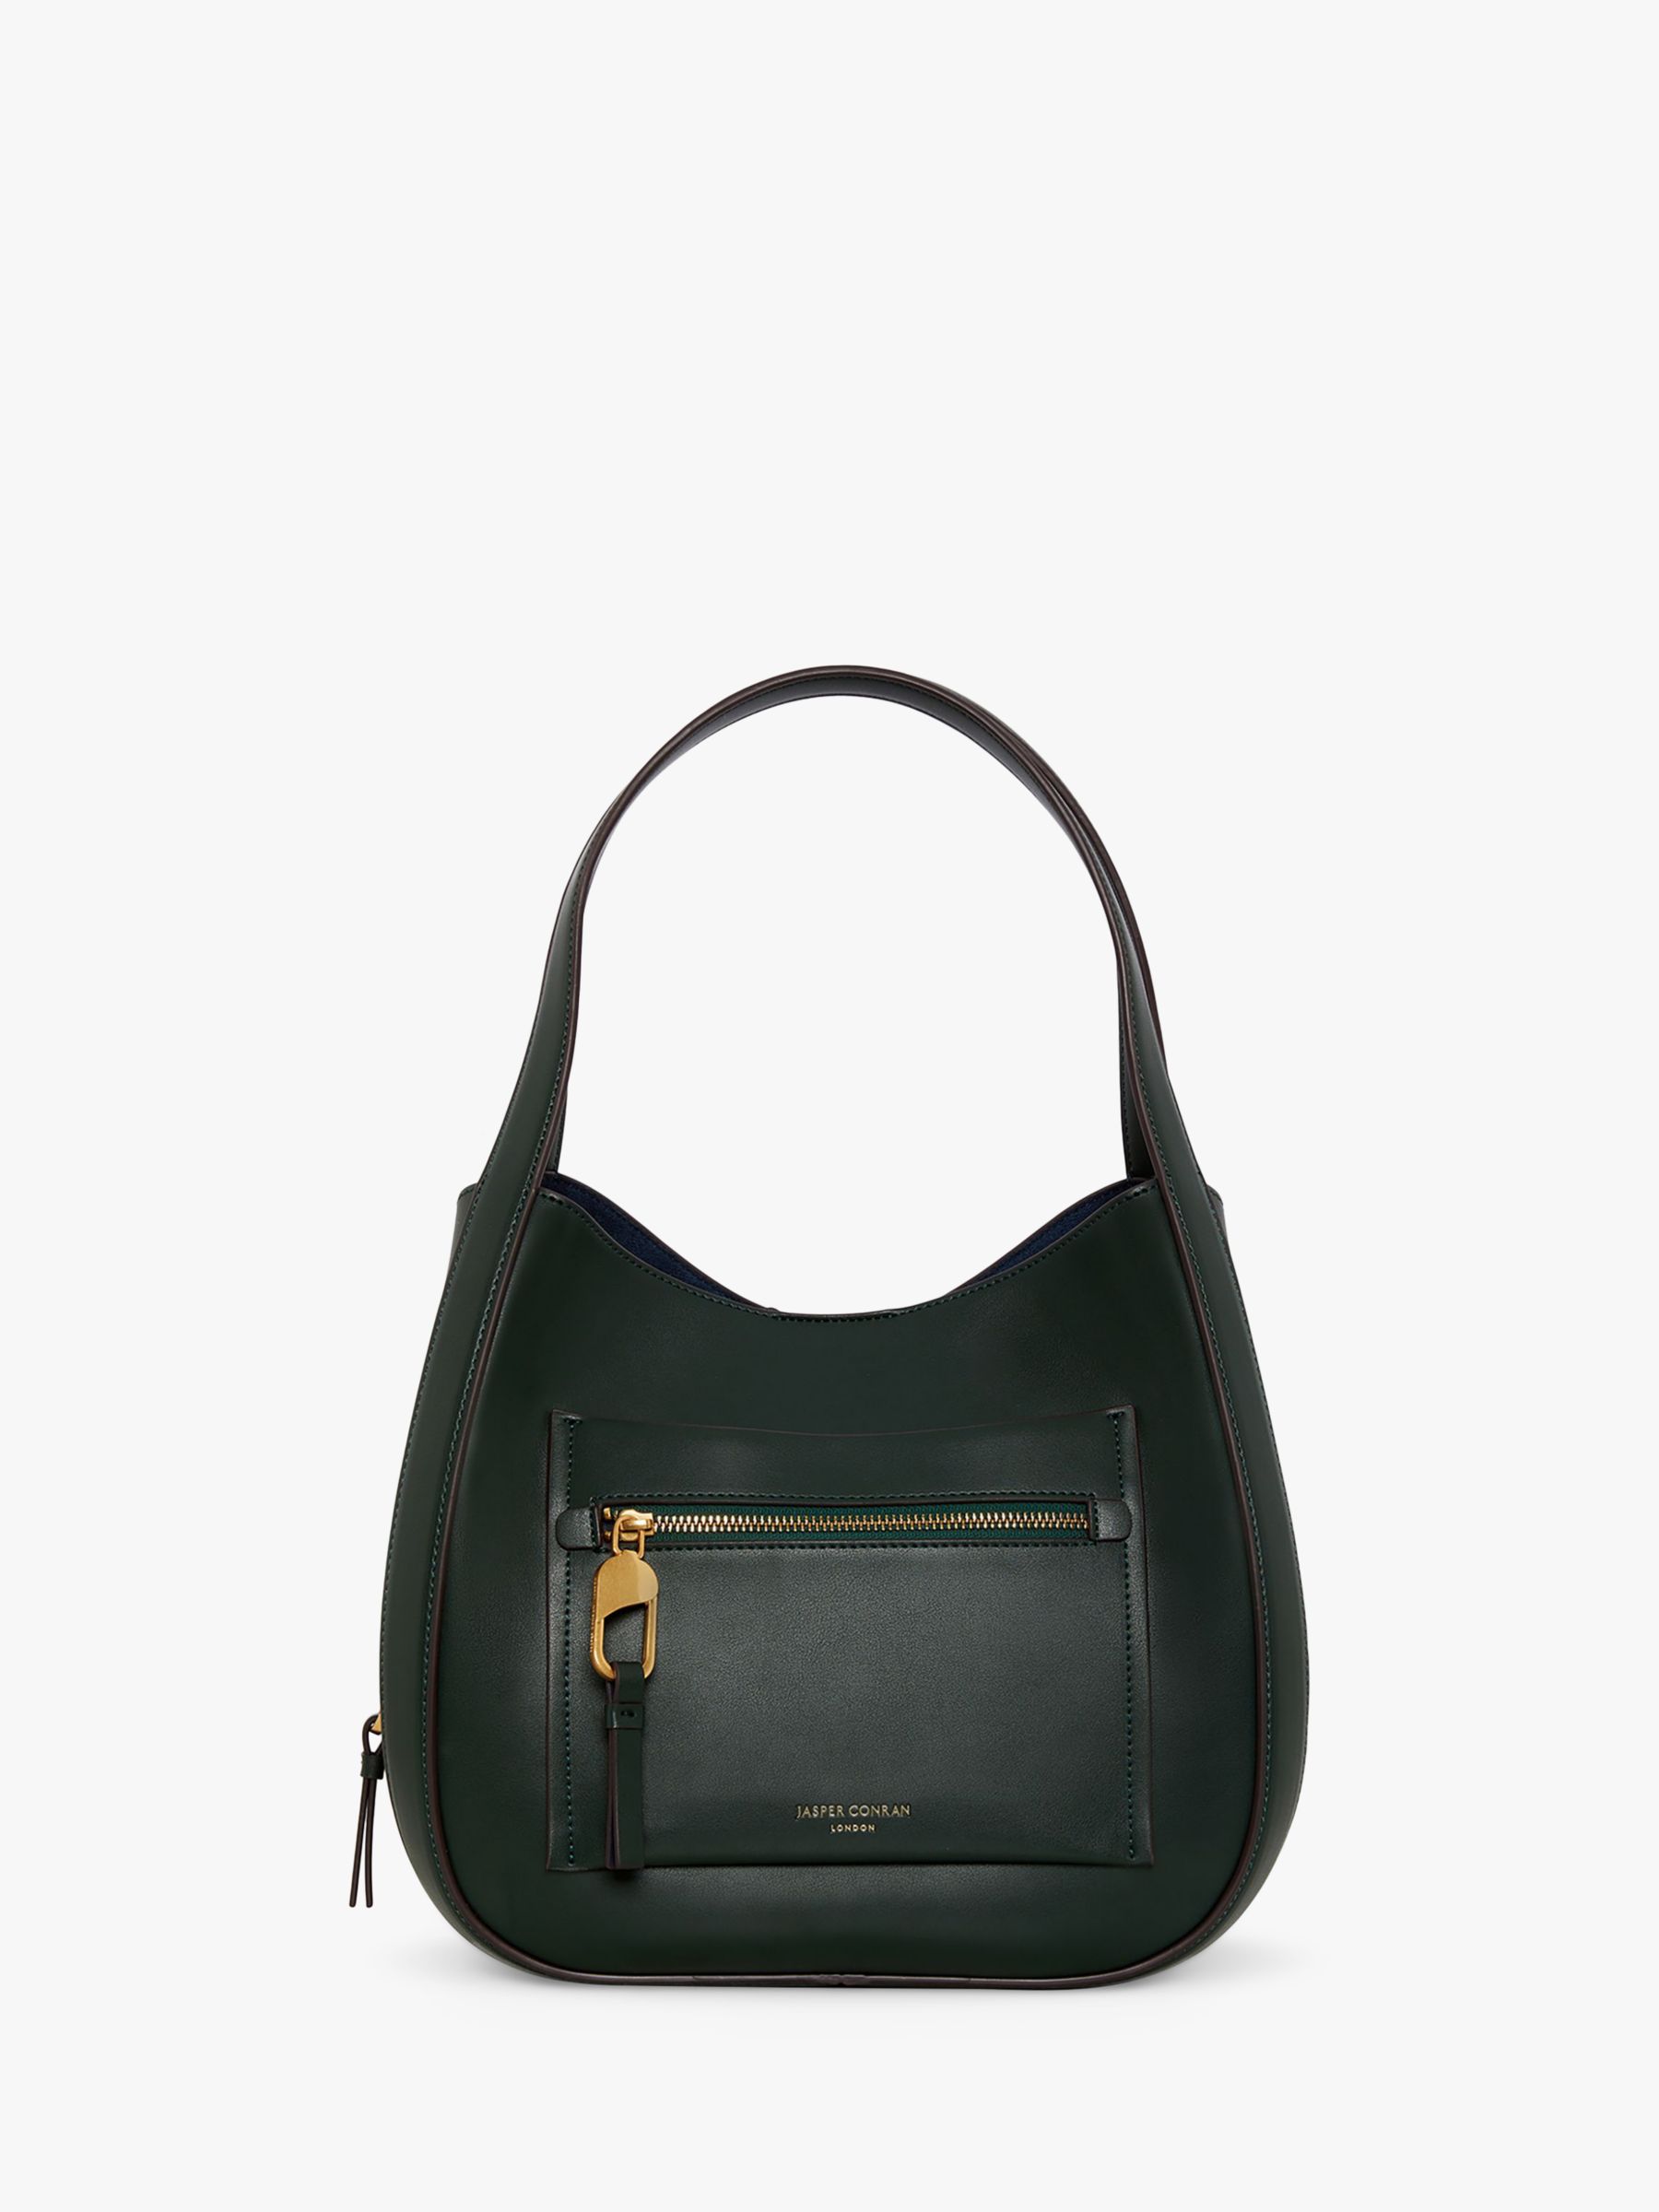 Jasper Conran London Colette Hobo Bag, Dark Green at John Lewis & Partners